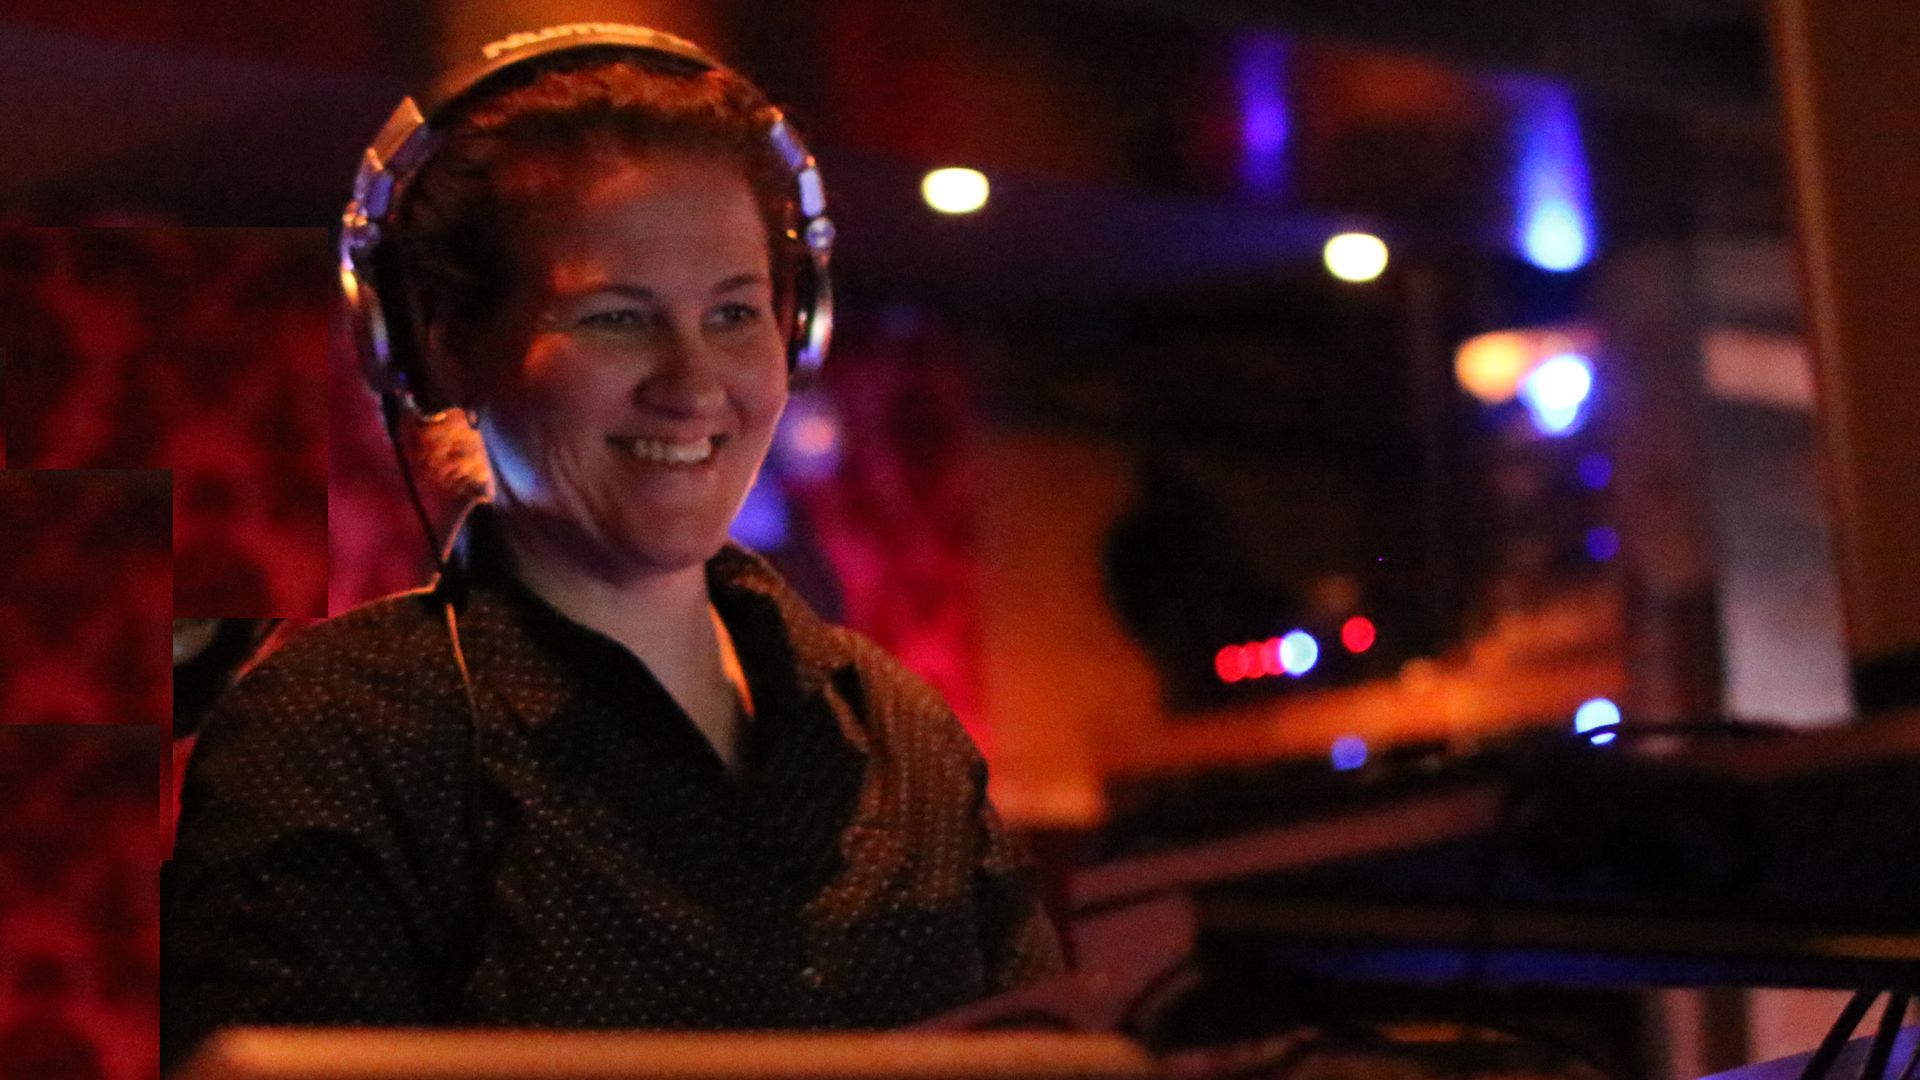 Jenna Jordan, wearing headphones, smiles as she looks at a sound mixing board.